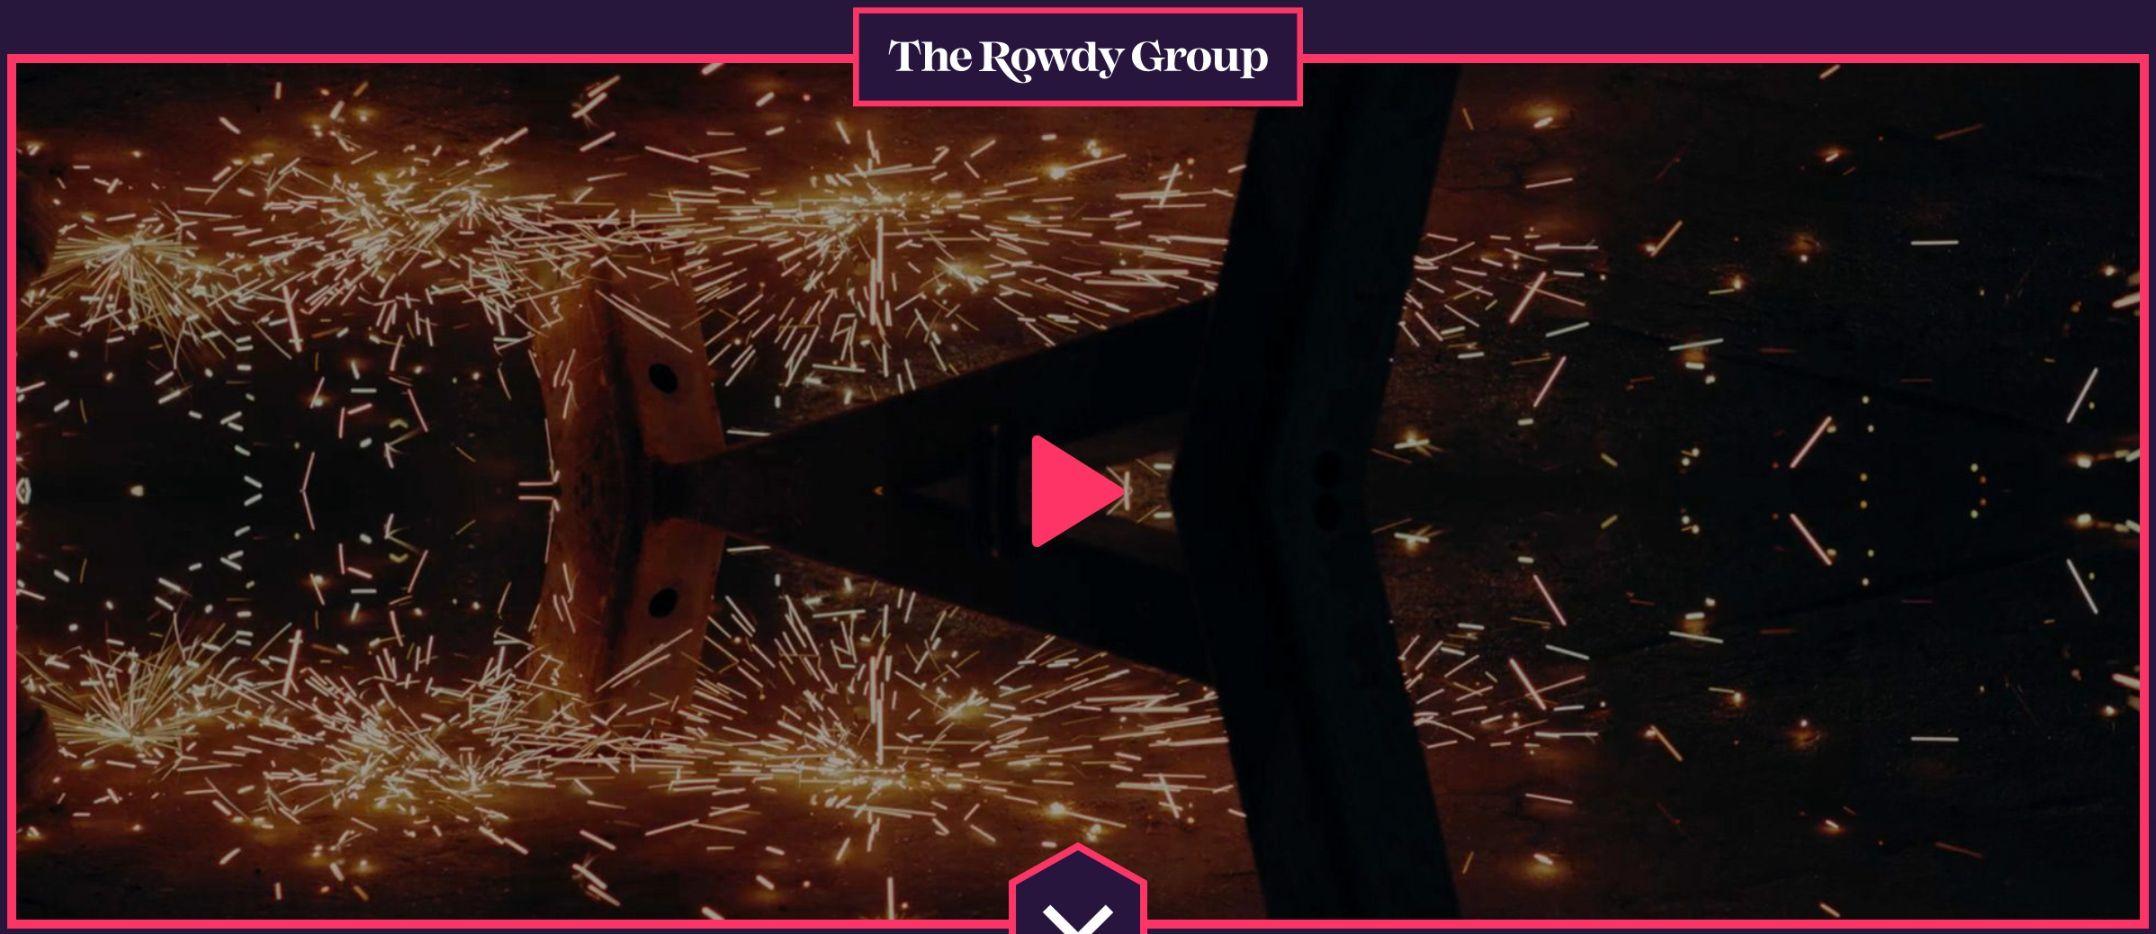 The Rowdy Group - Australian advertising agency